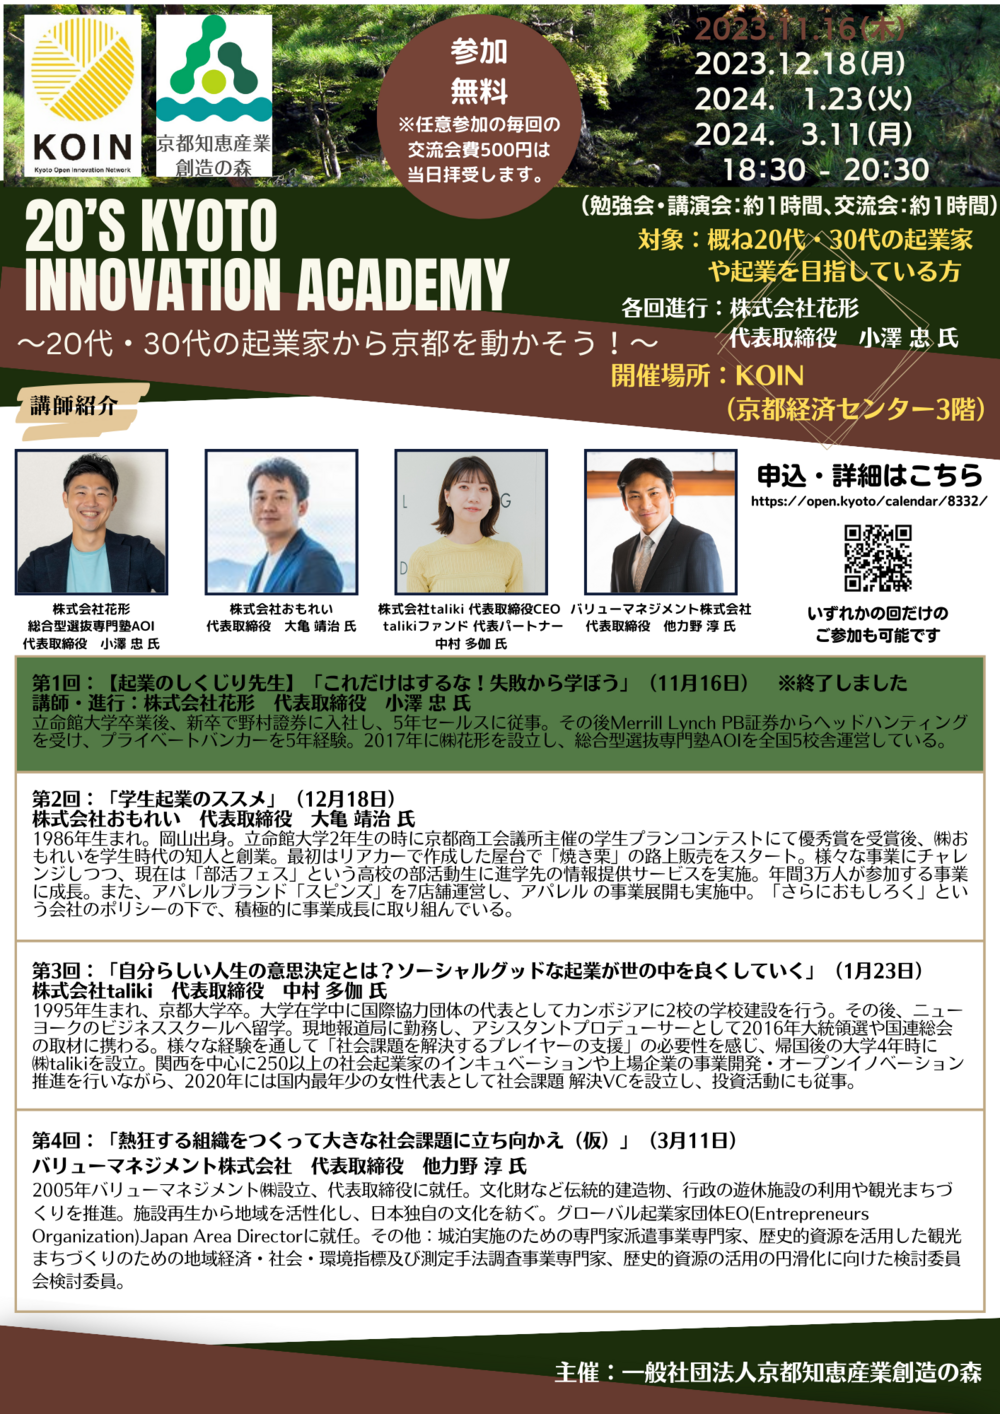 2nd_20's Kyoto Innovation Academy.png